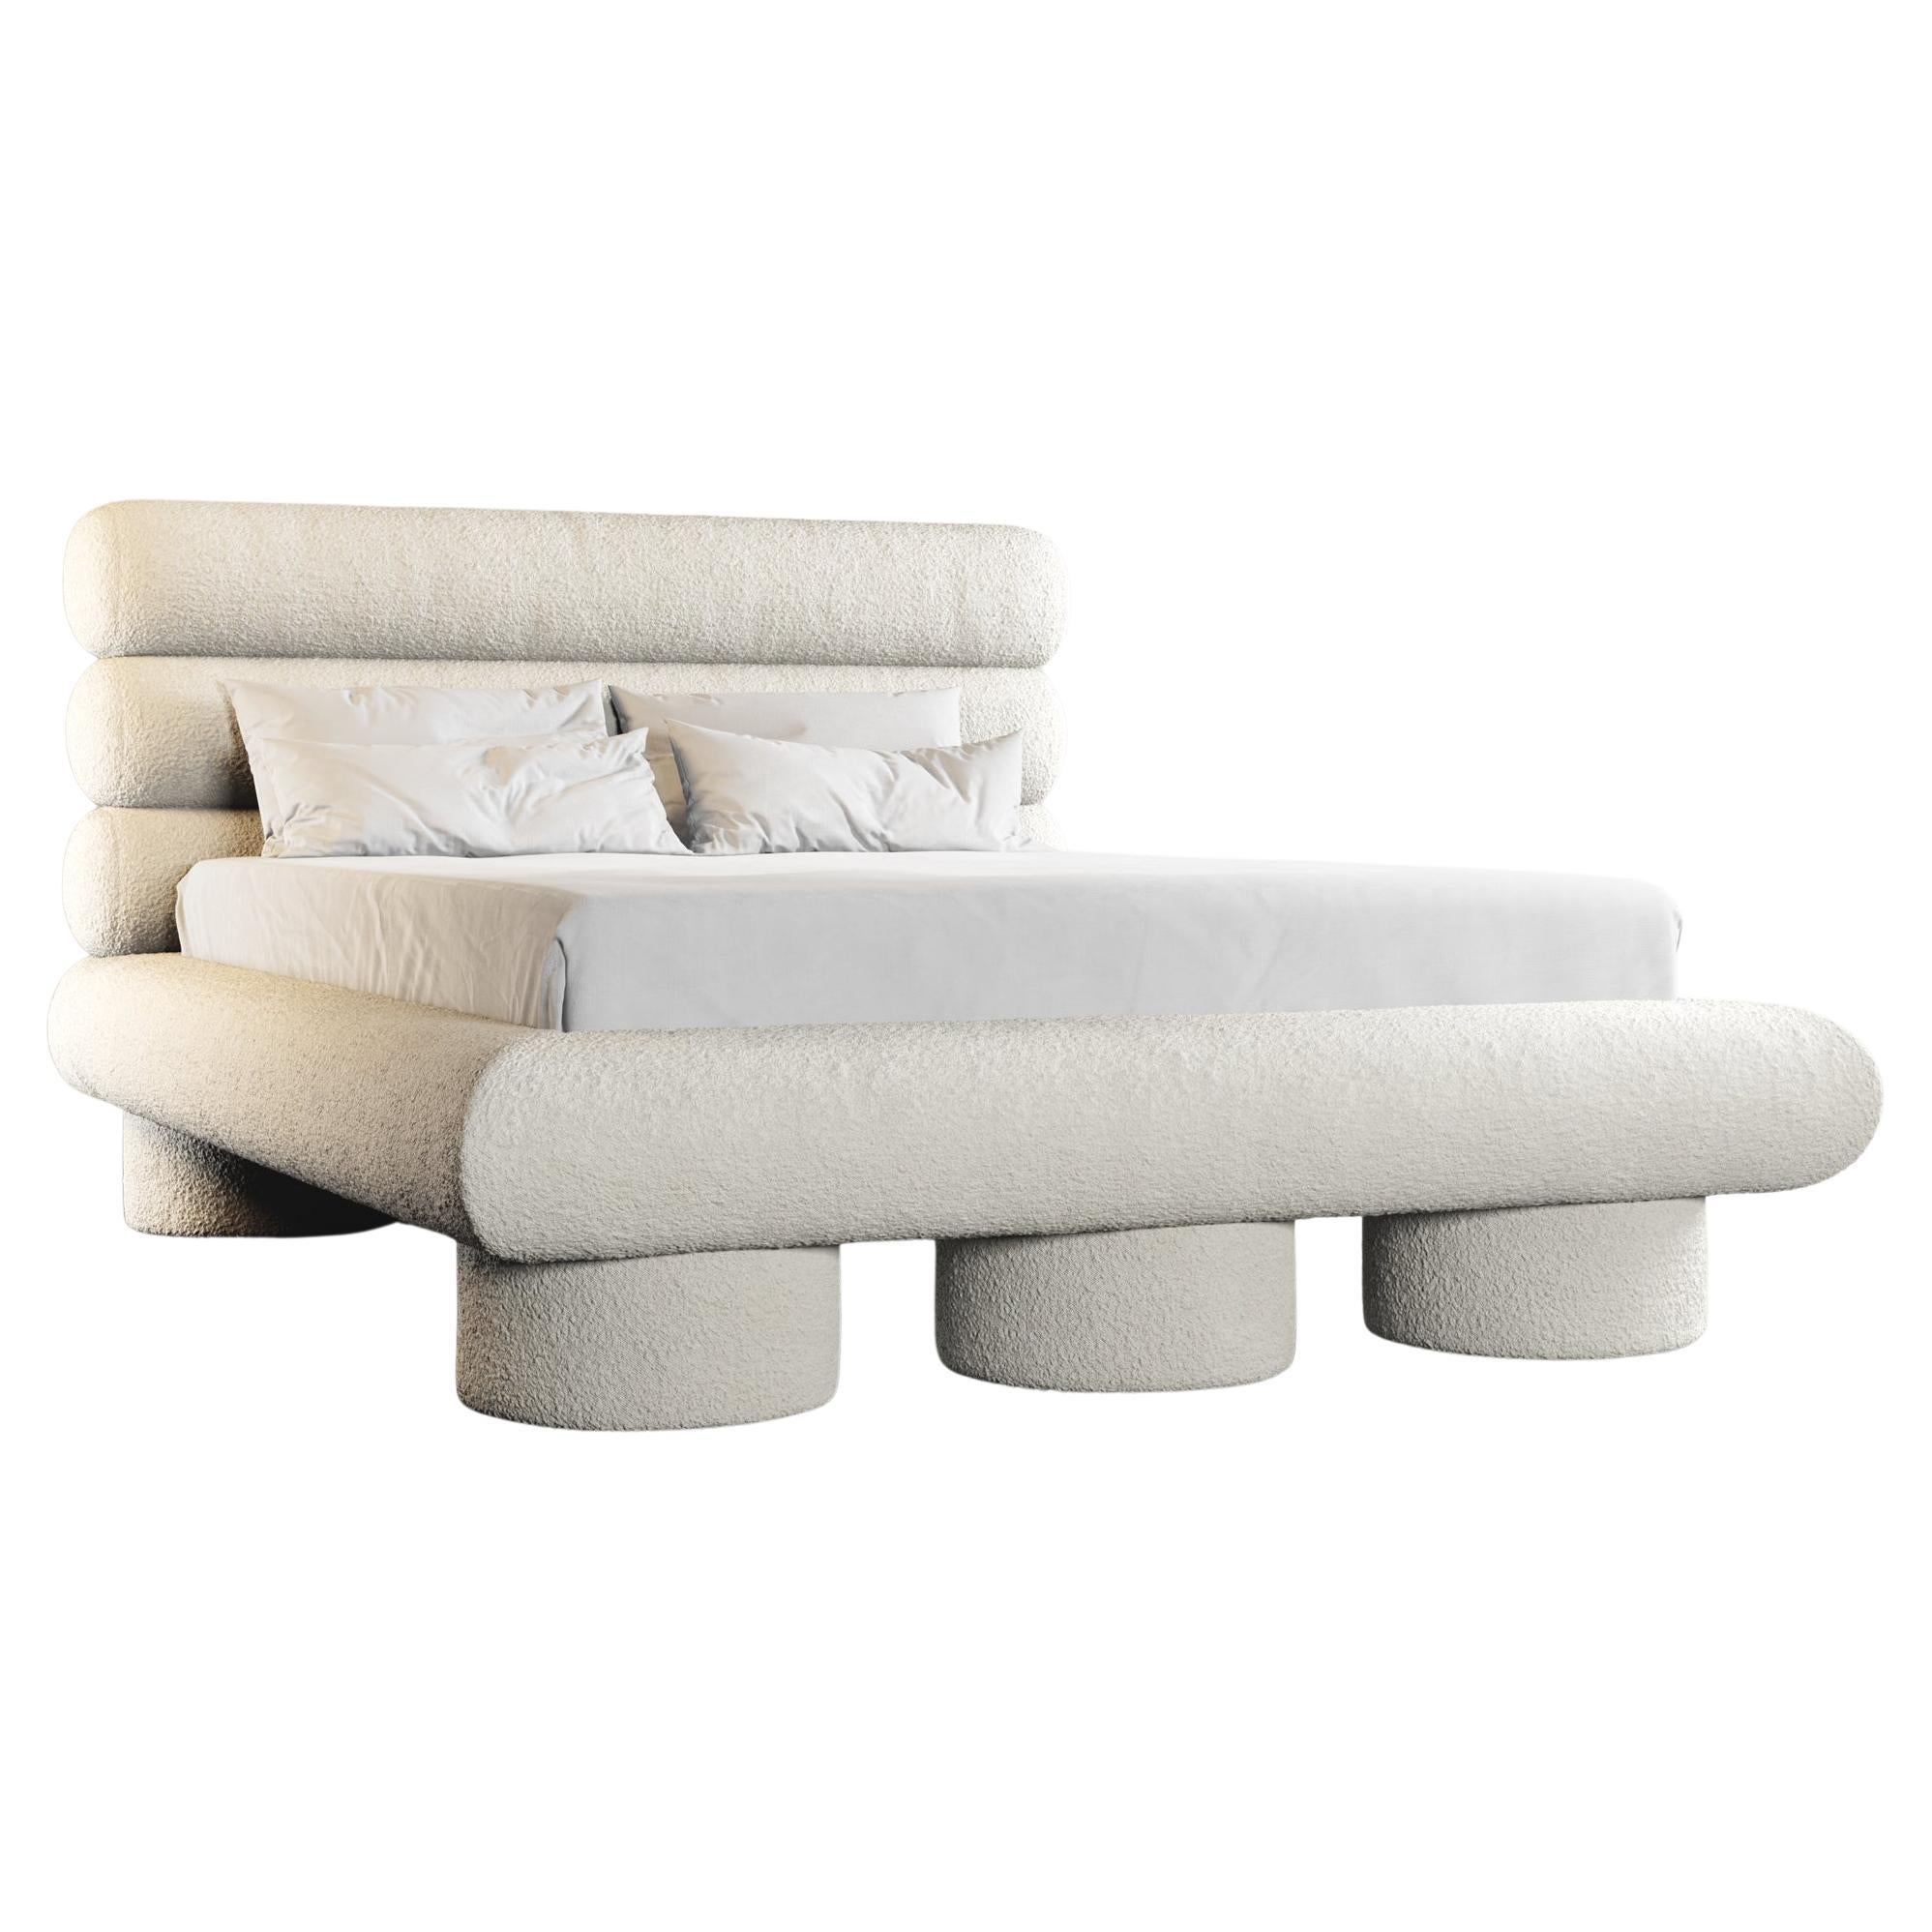 Dip Bed - Modern Design in Cloud Boucle